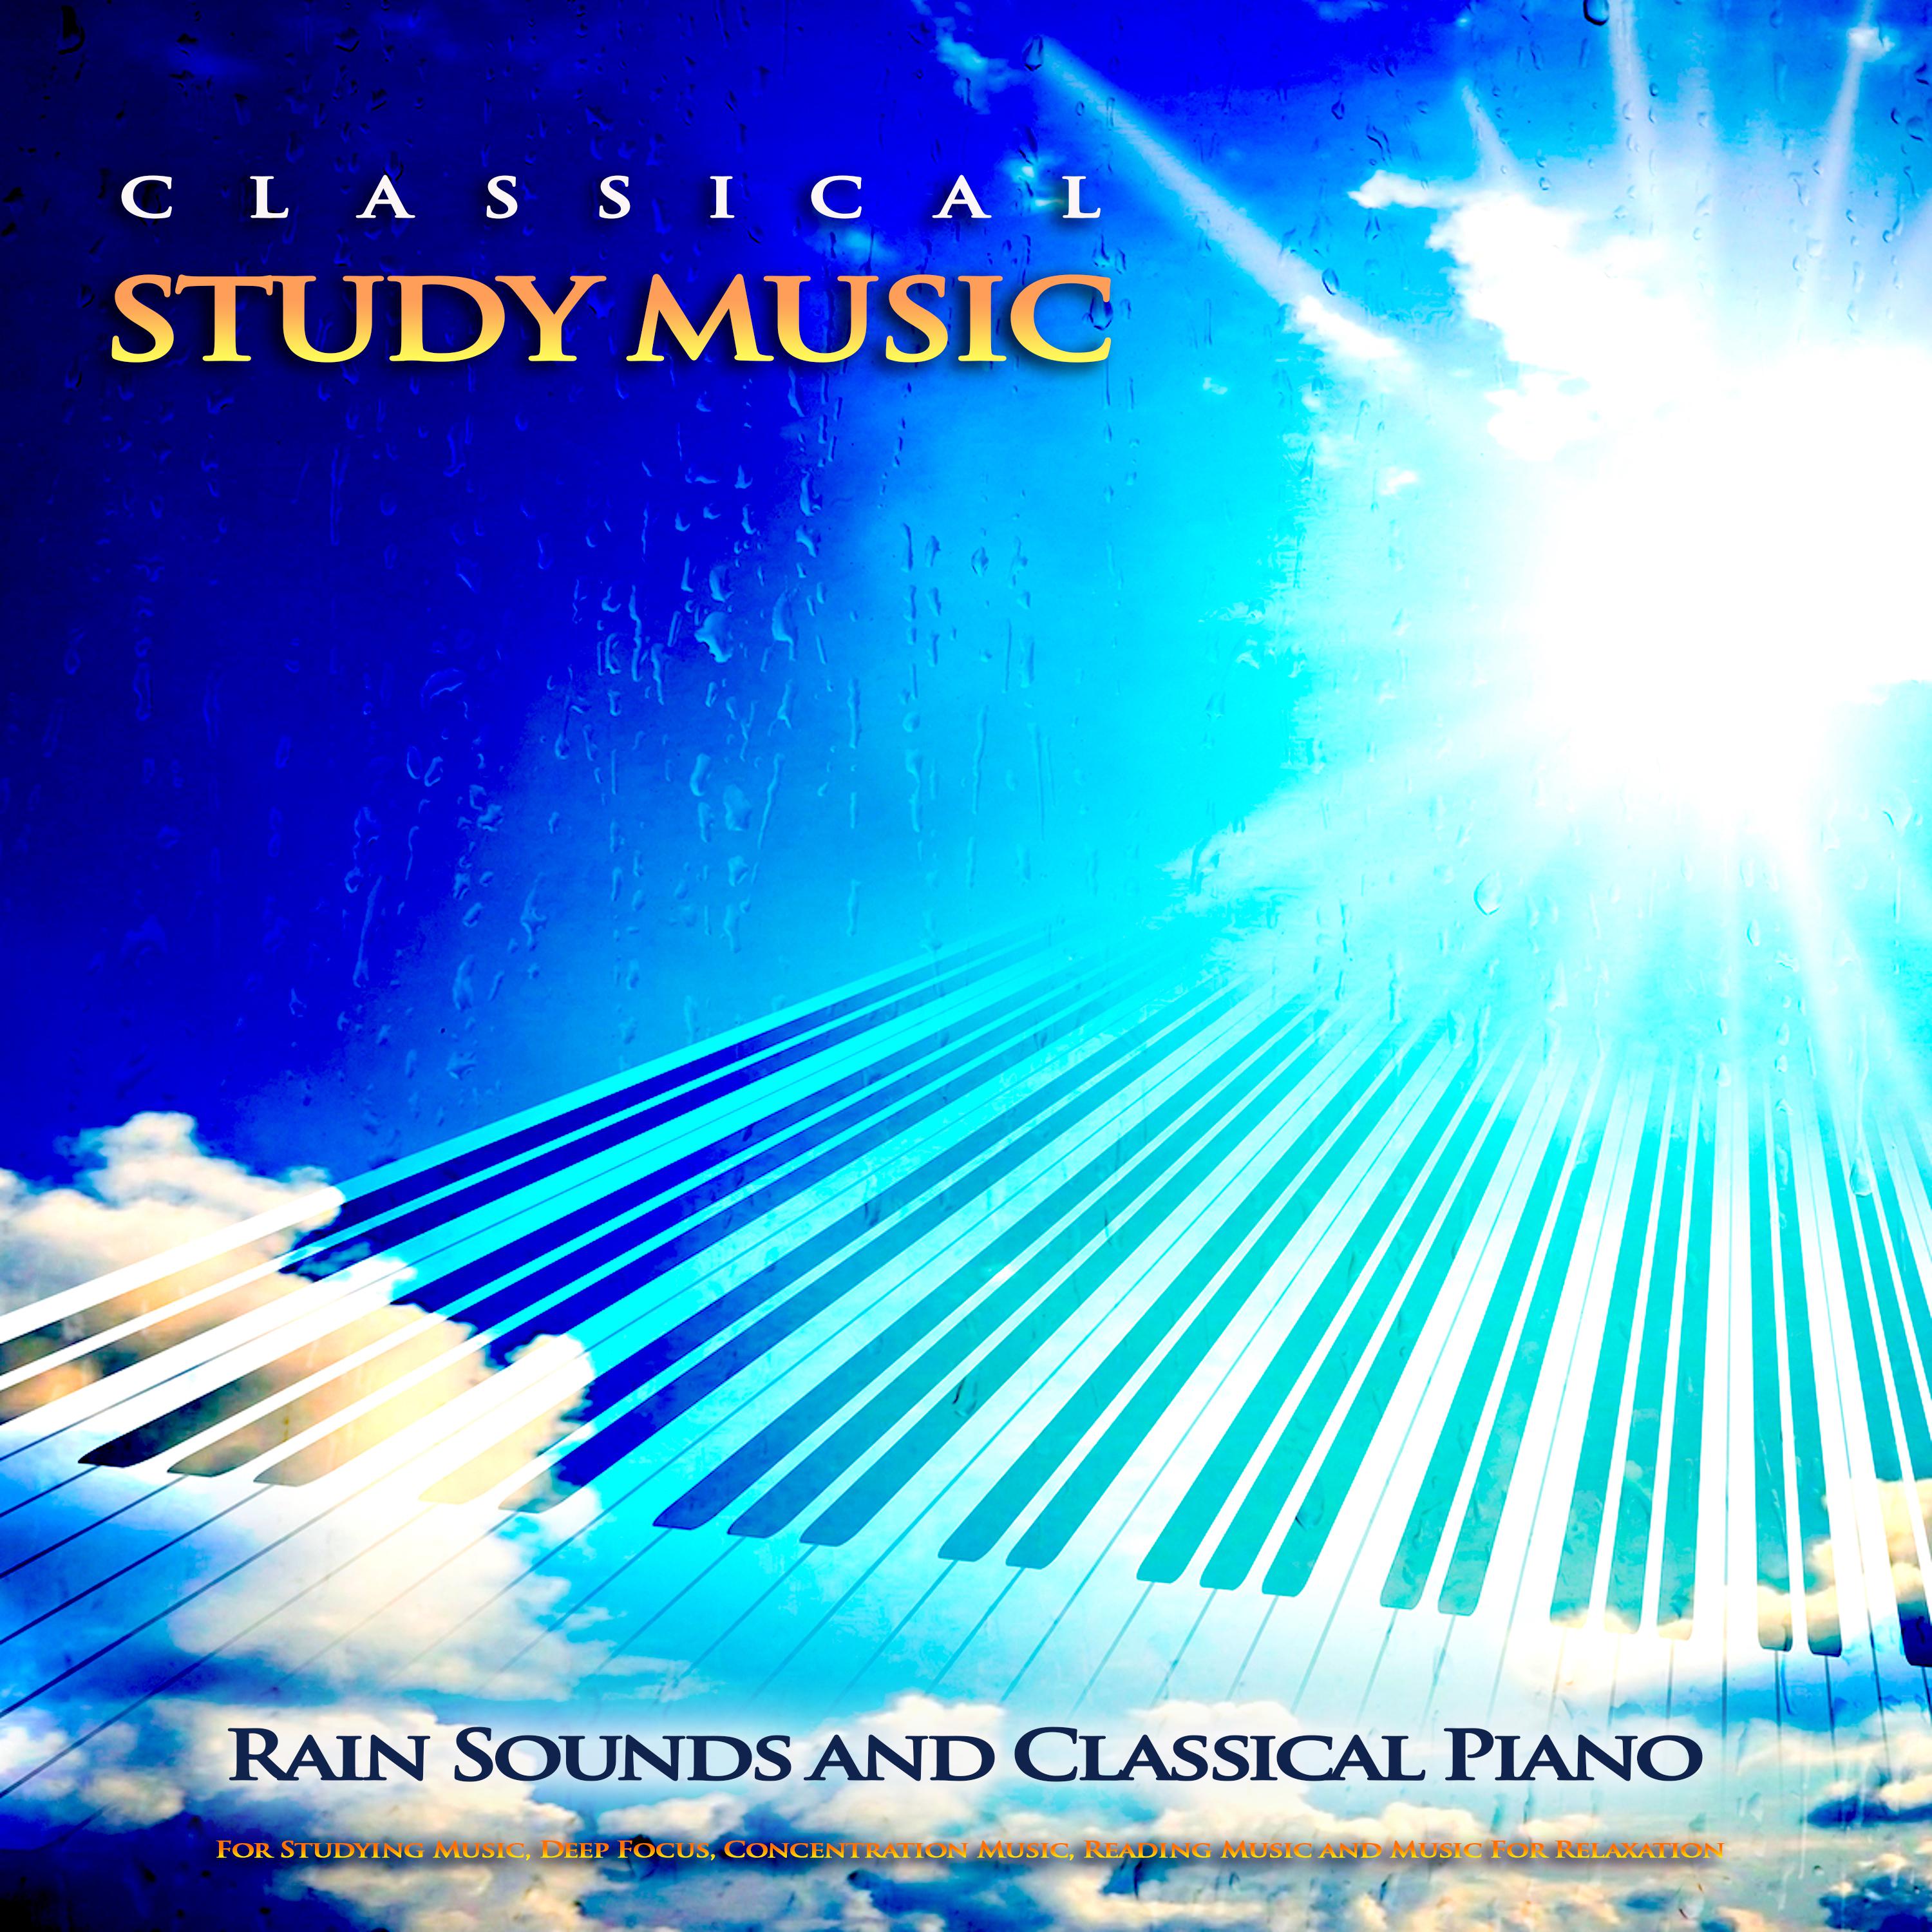 Klaviersonate KV-545 - Mozart - Classical Piano Music and Rain Sounds - Classical Study Music